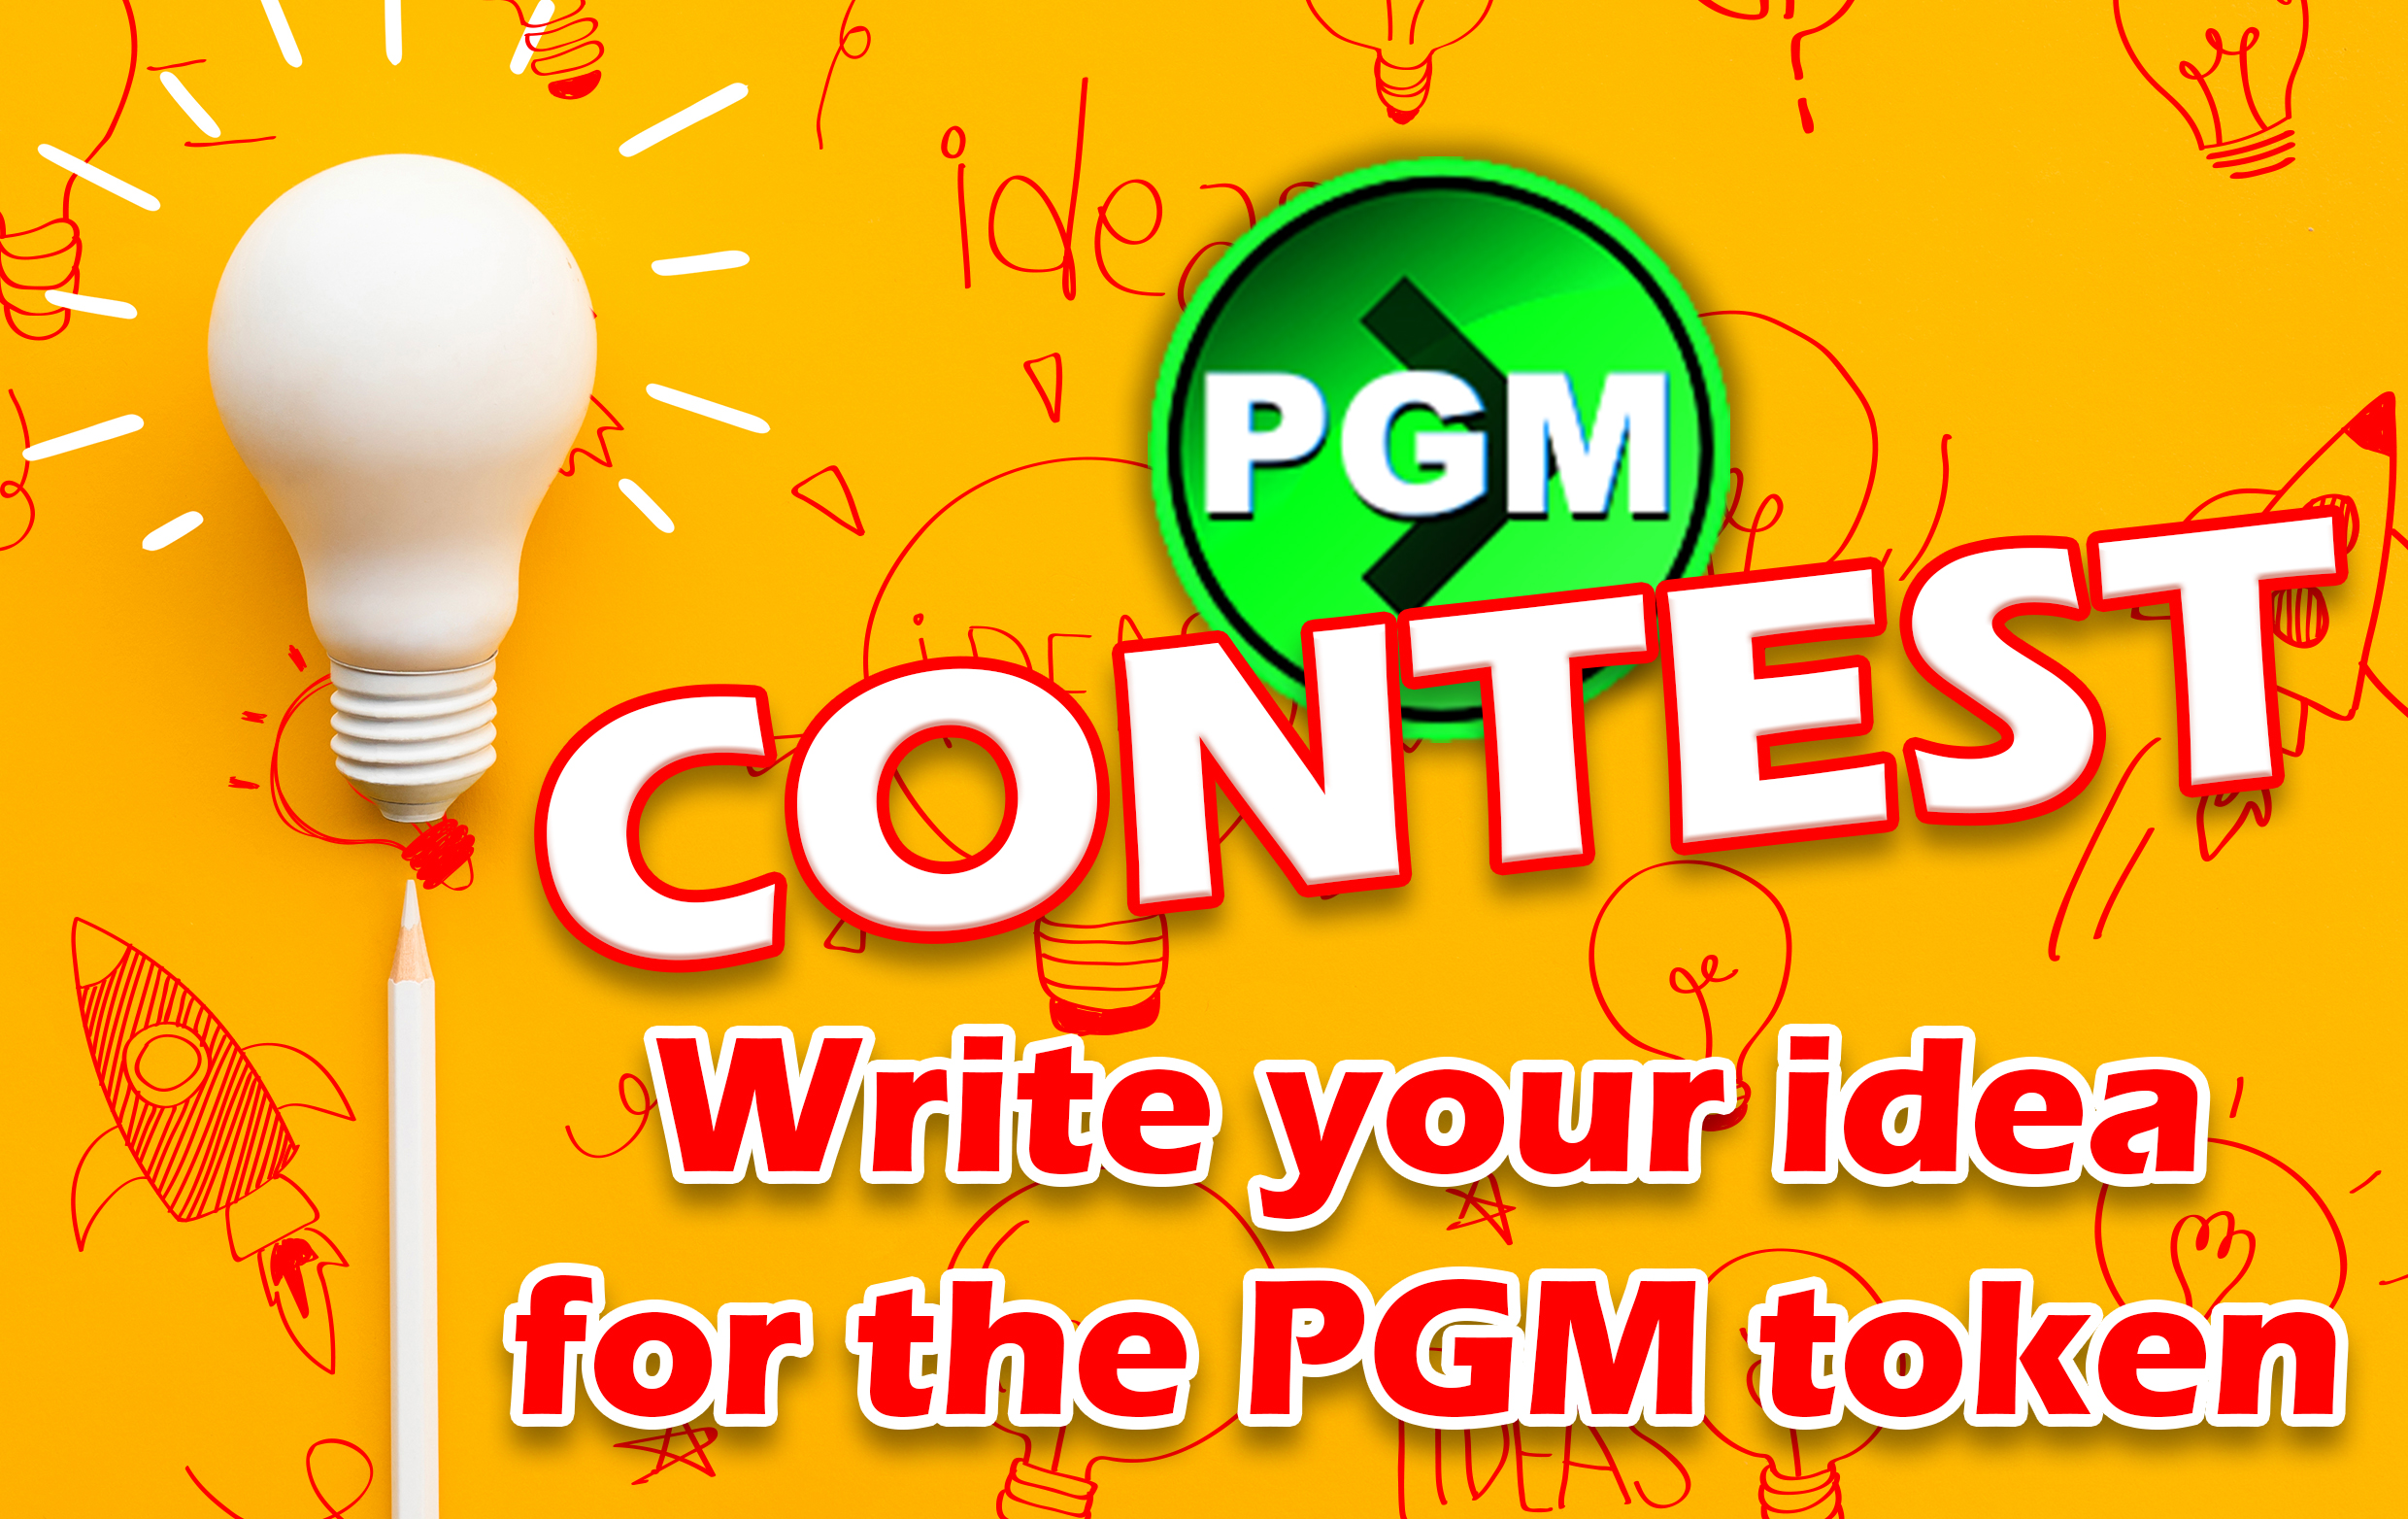 @zottone444/write-your-idea-for-the-pgm-token-win-fabulous-prizes